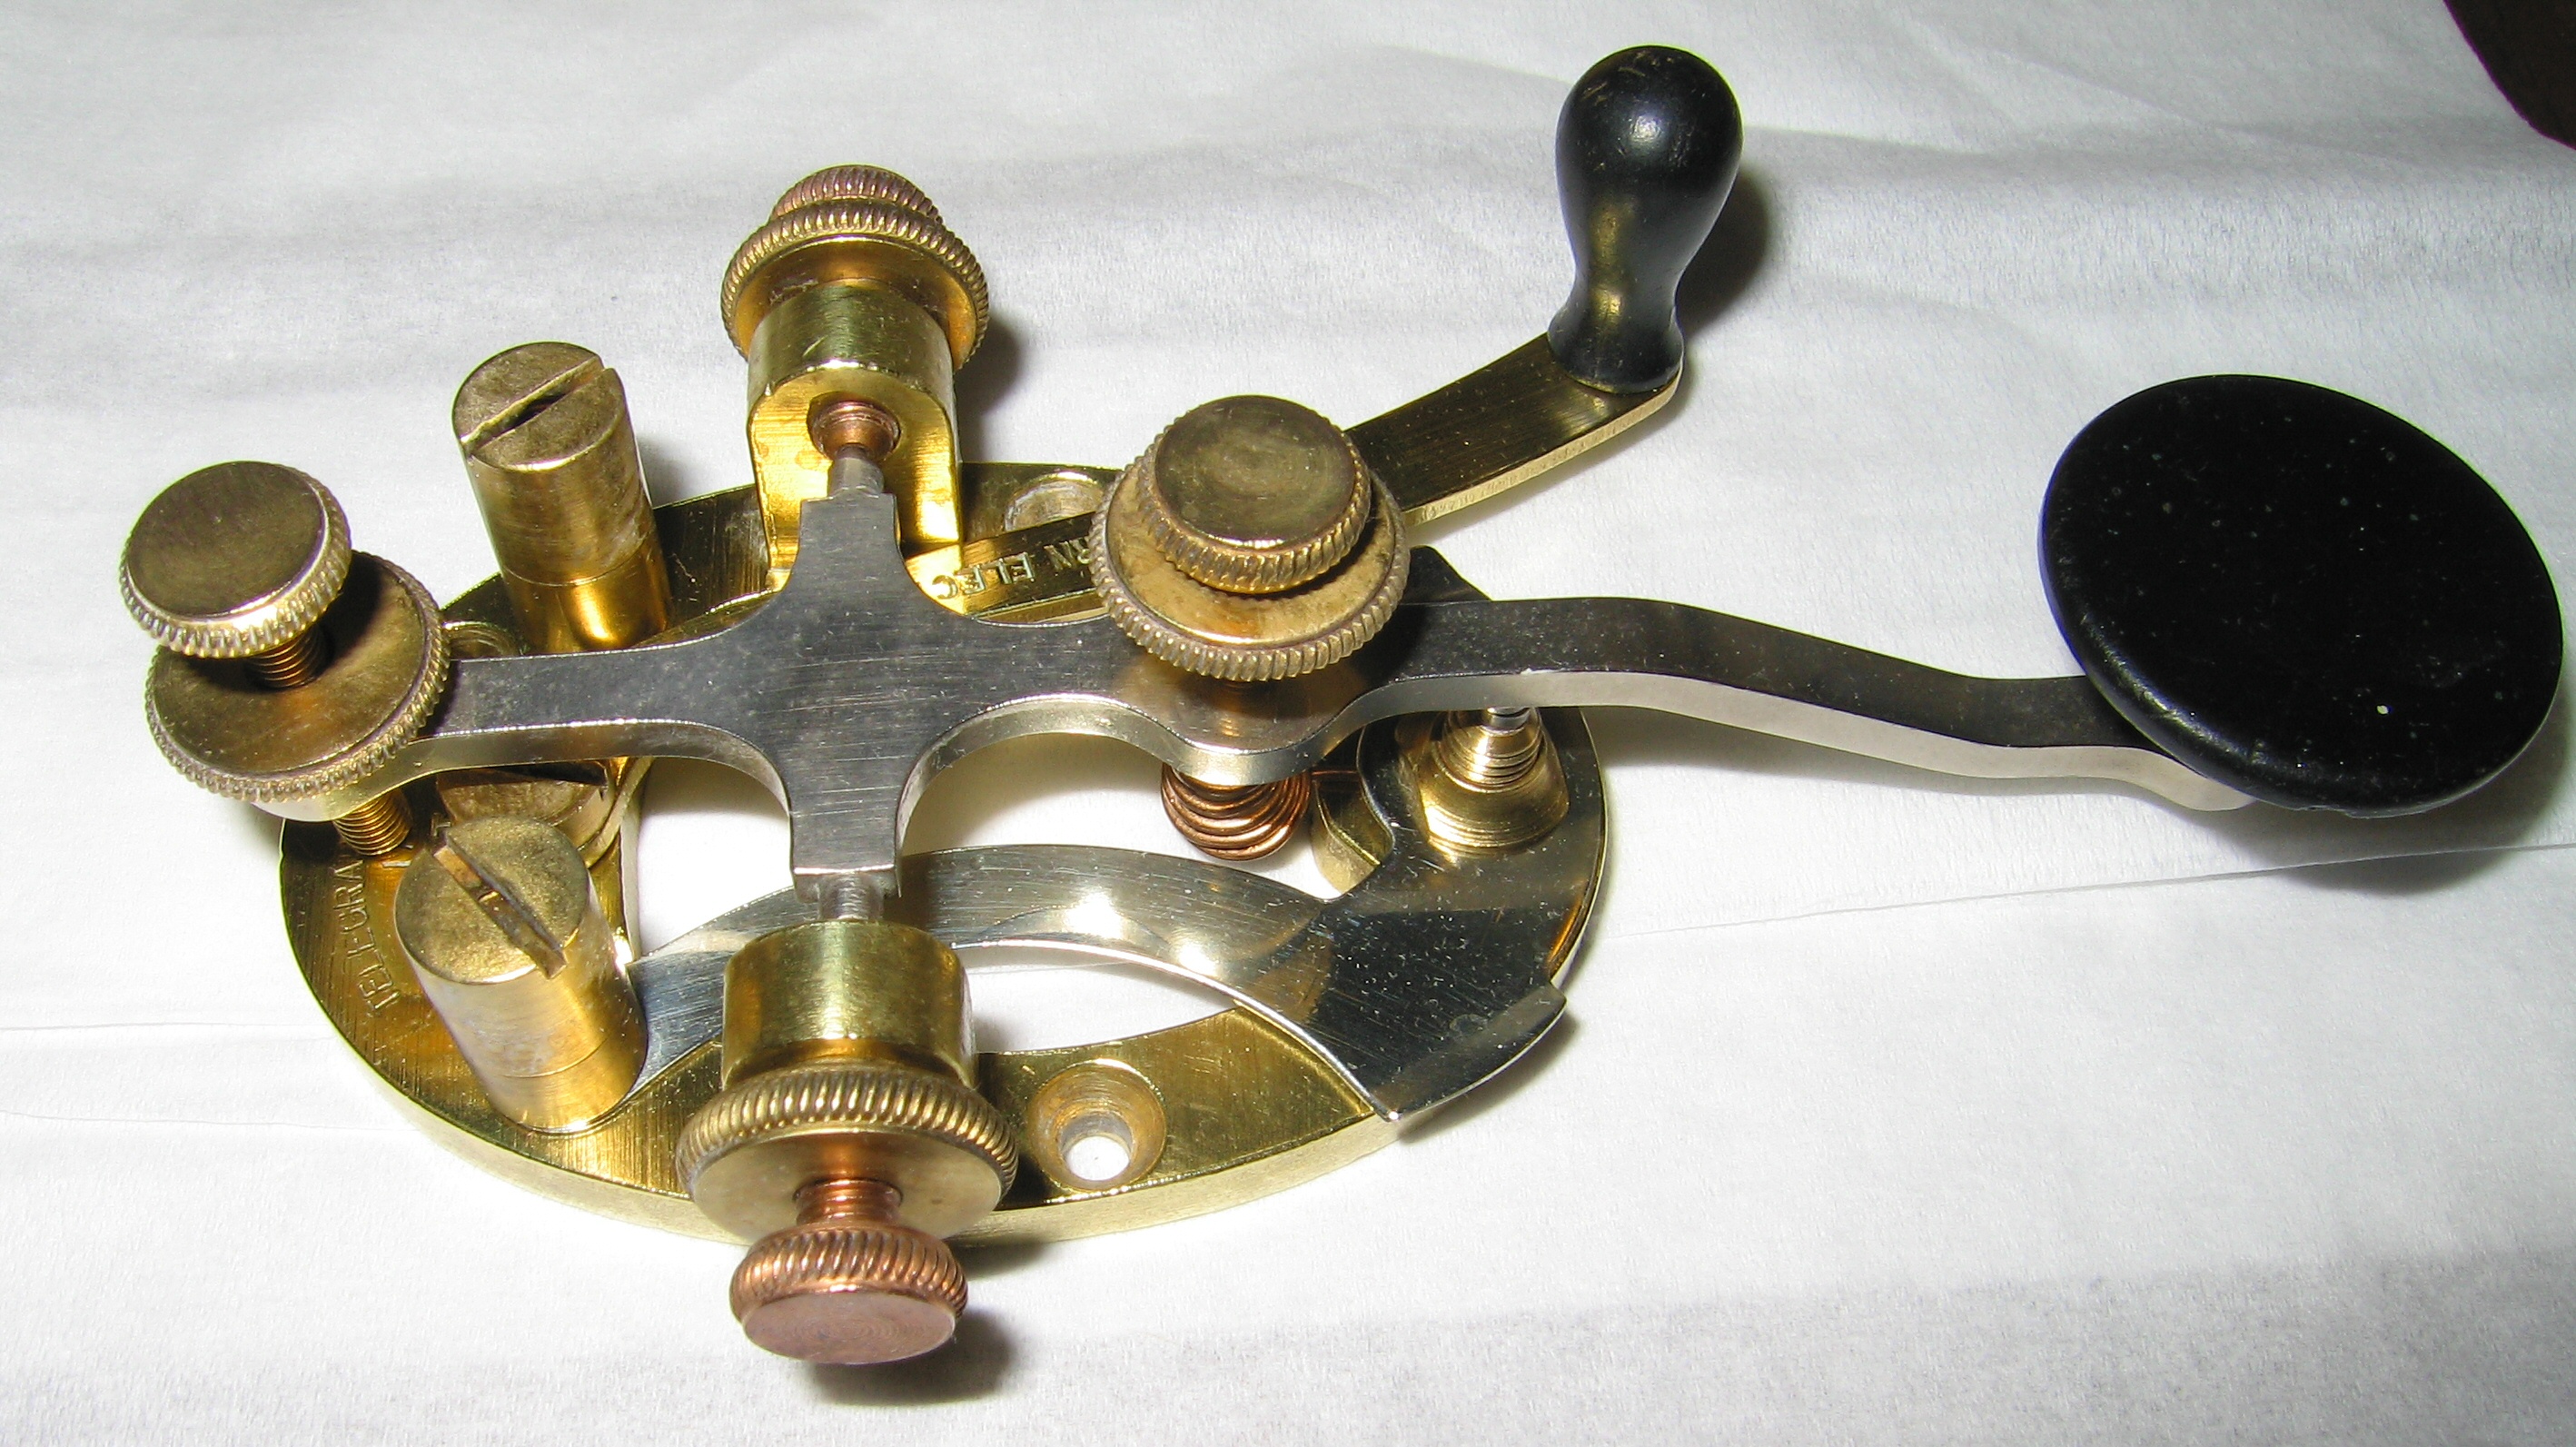 30s brass telegraph key that I restored